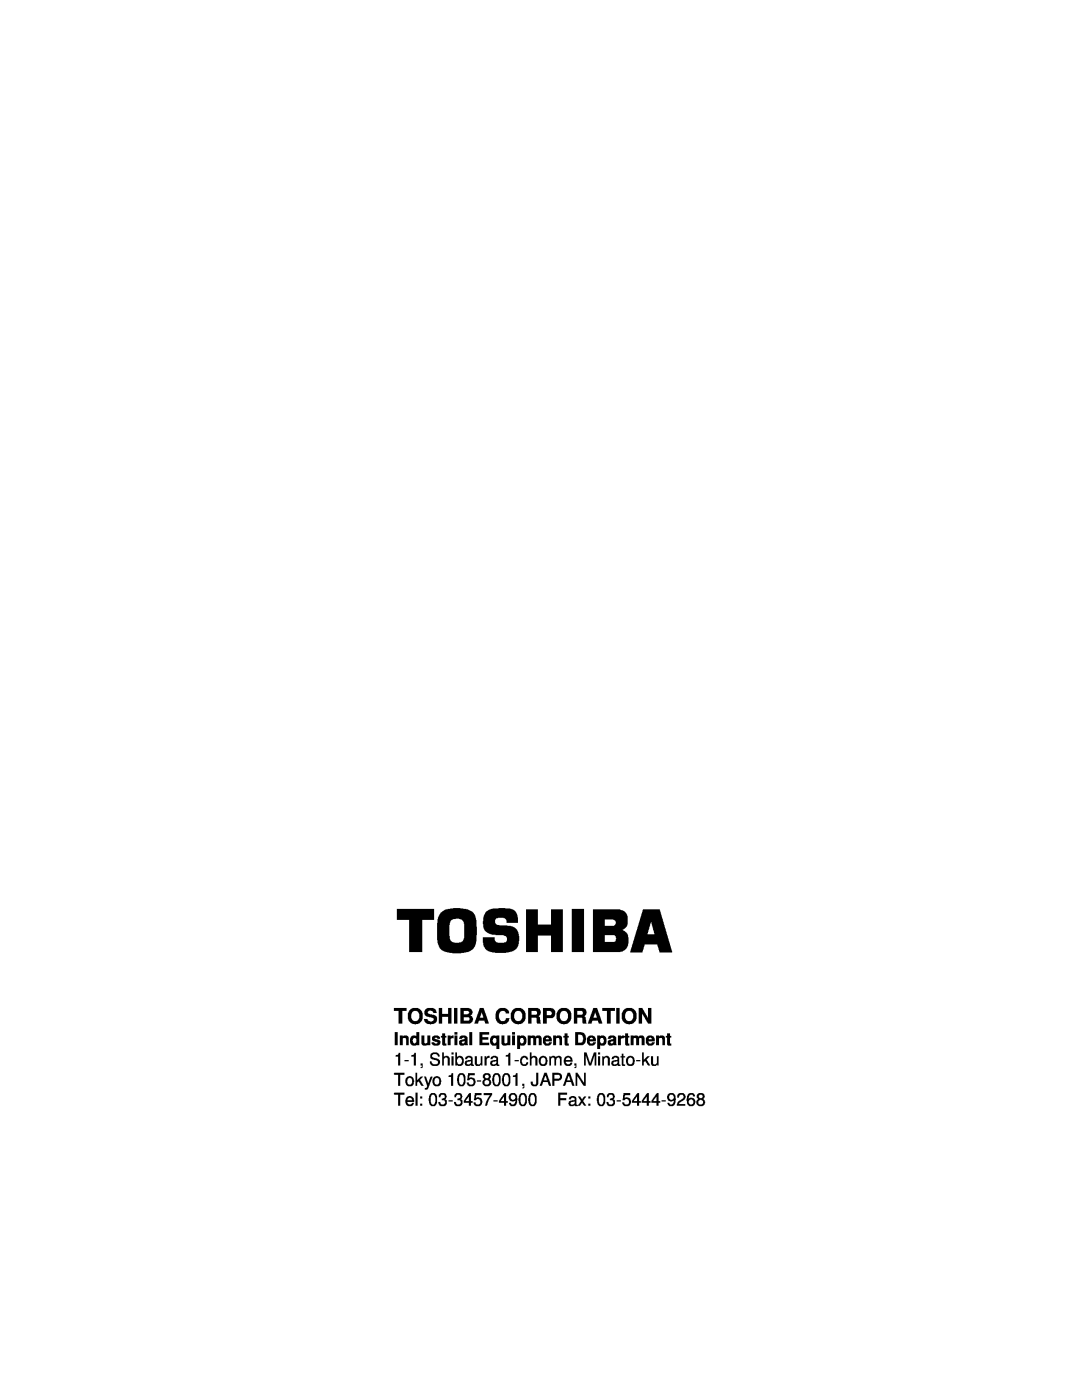 Toshiba AS311 user manual Toshiba Corporation, Industrial Equipment Department 